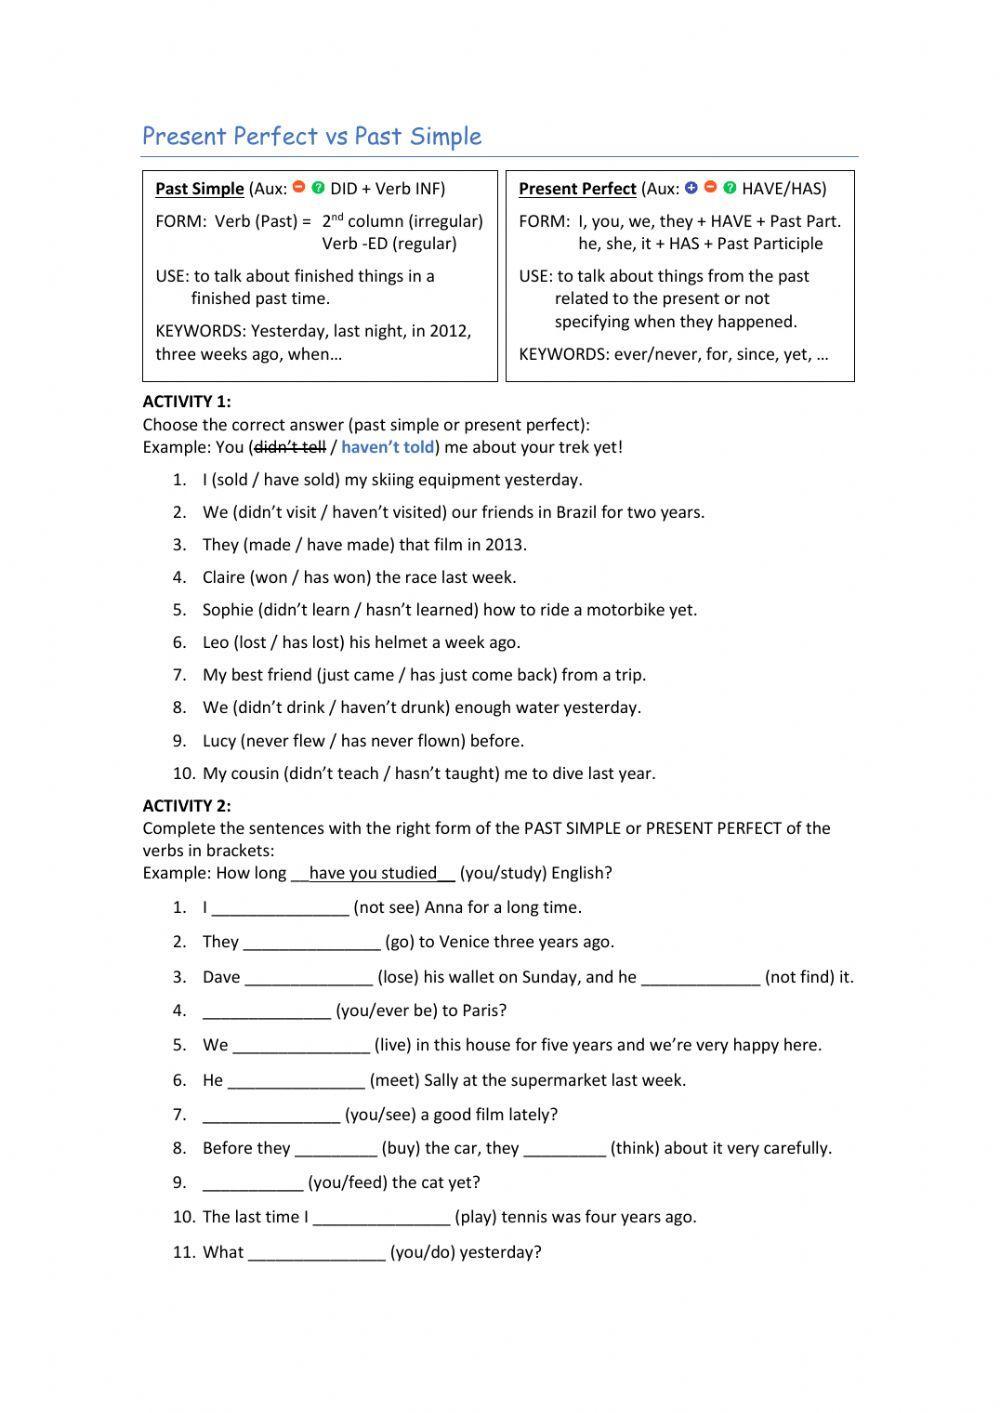 Present Perfect vs Past Simple online pdf worksheet | Live Worksheets